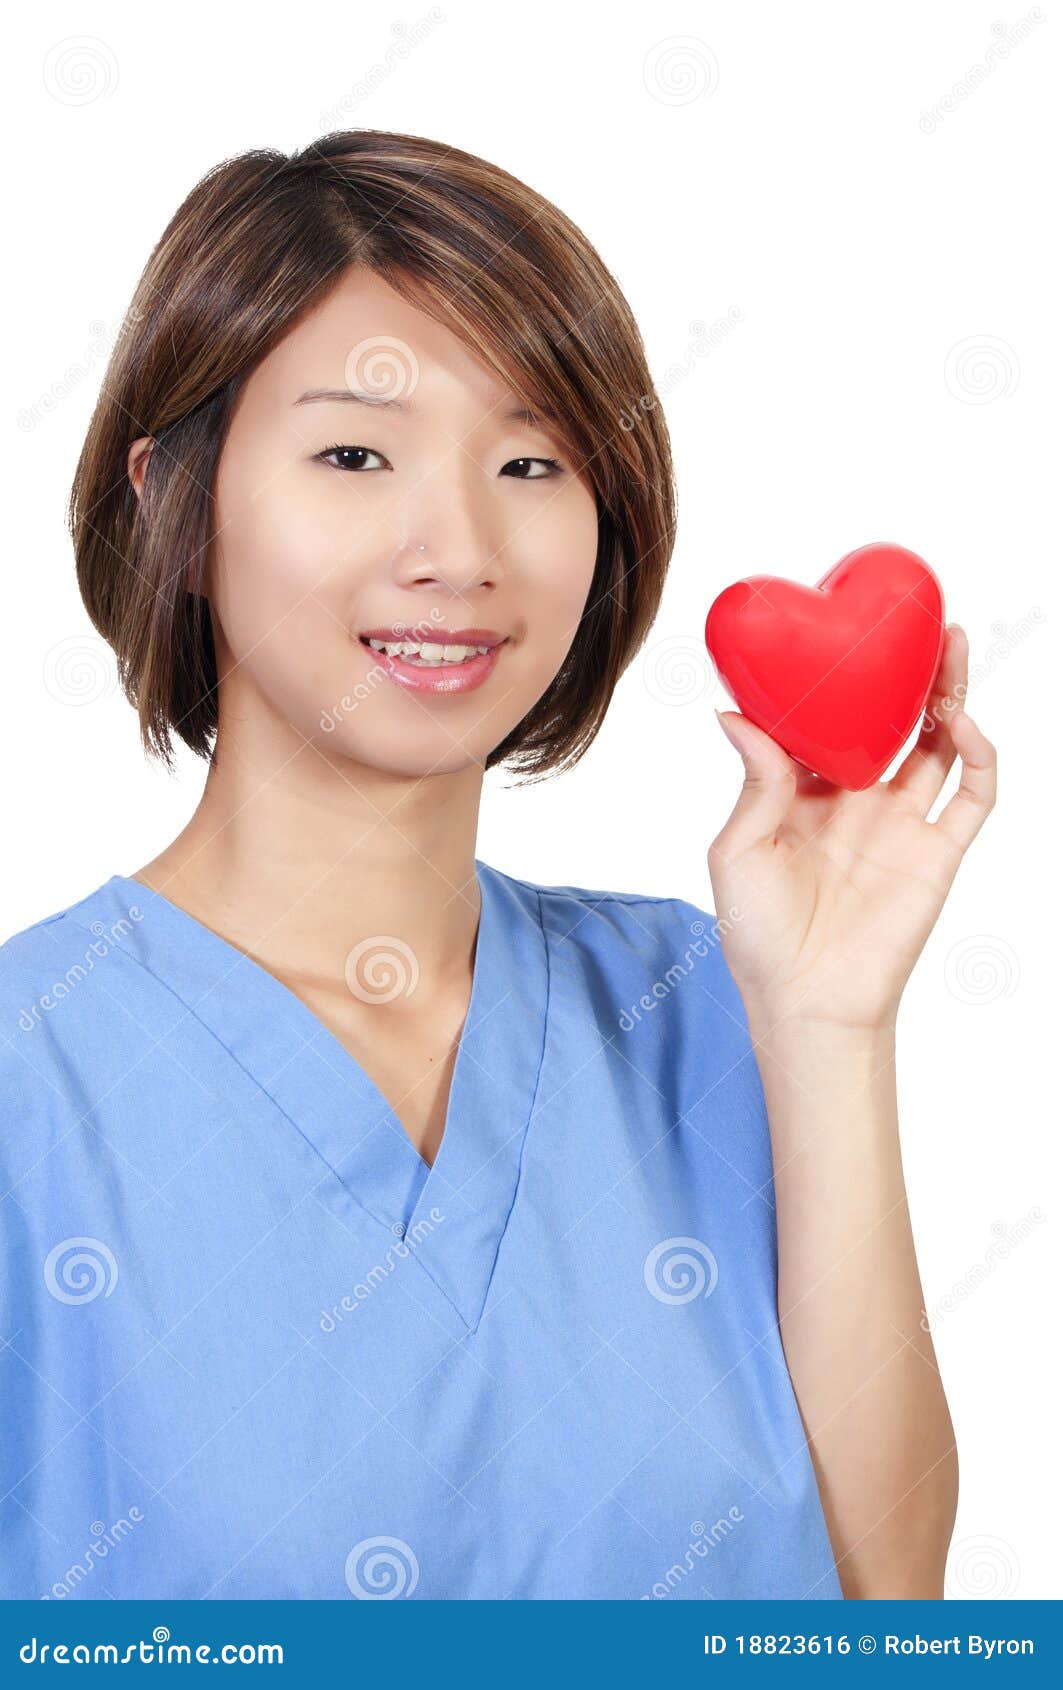 female cardiologist